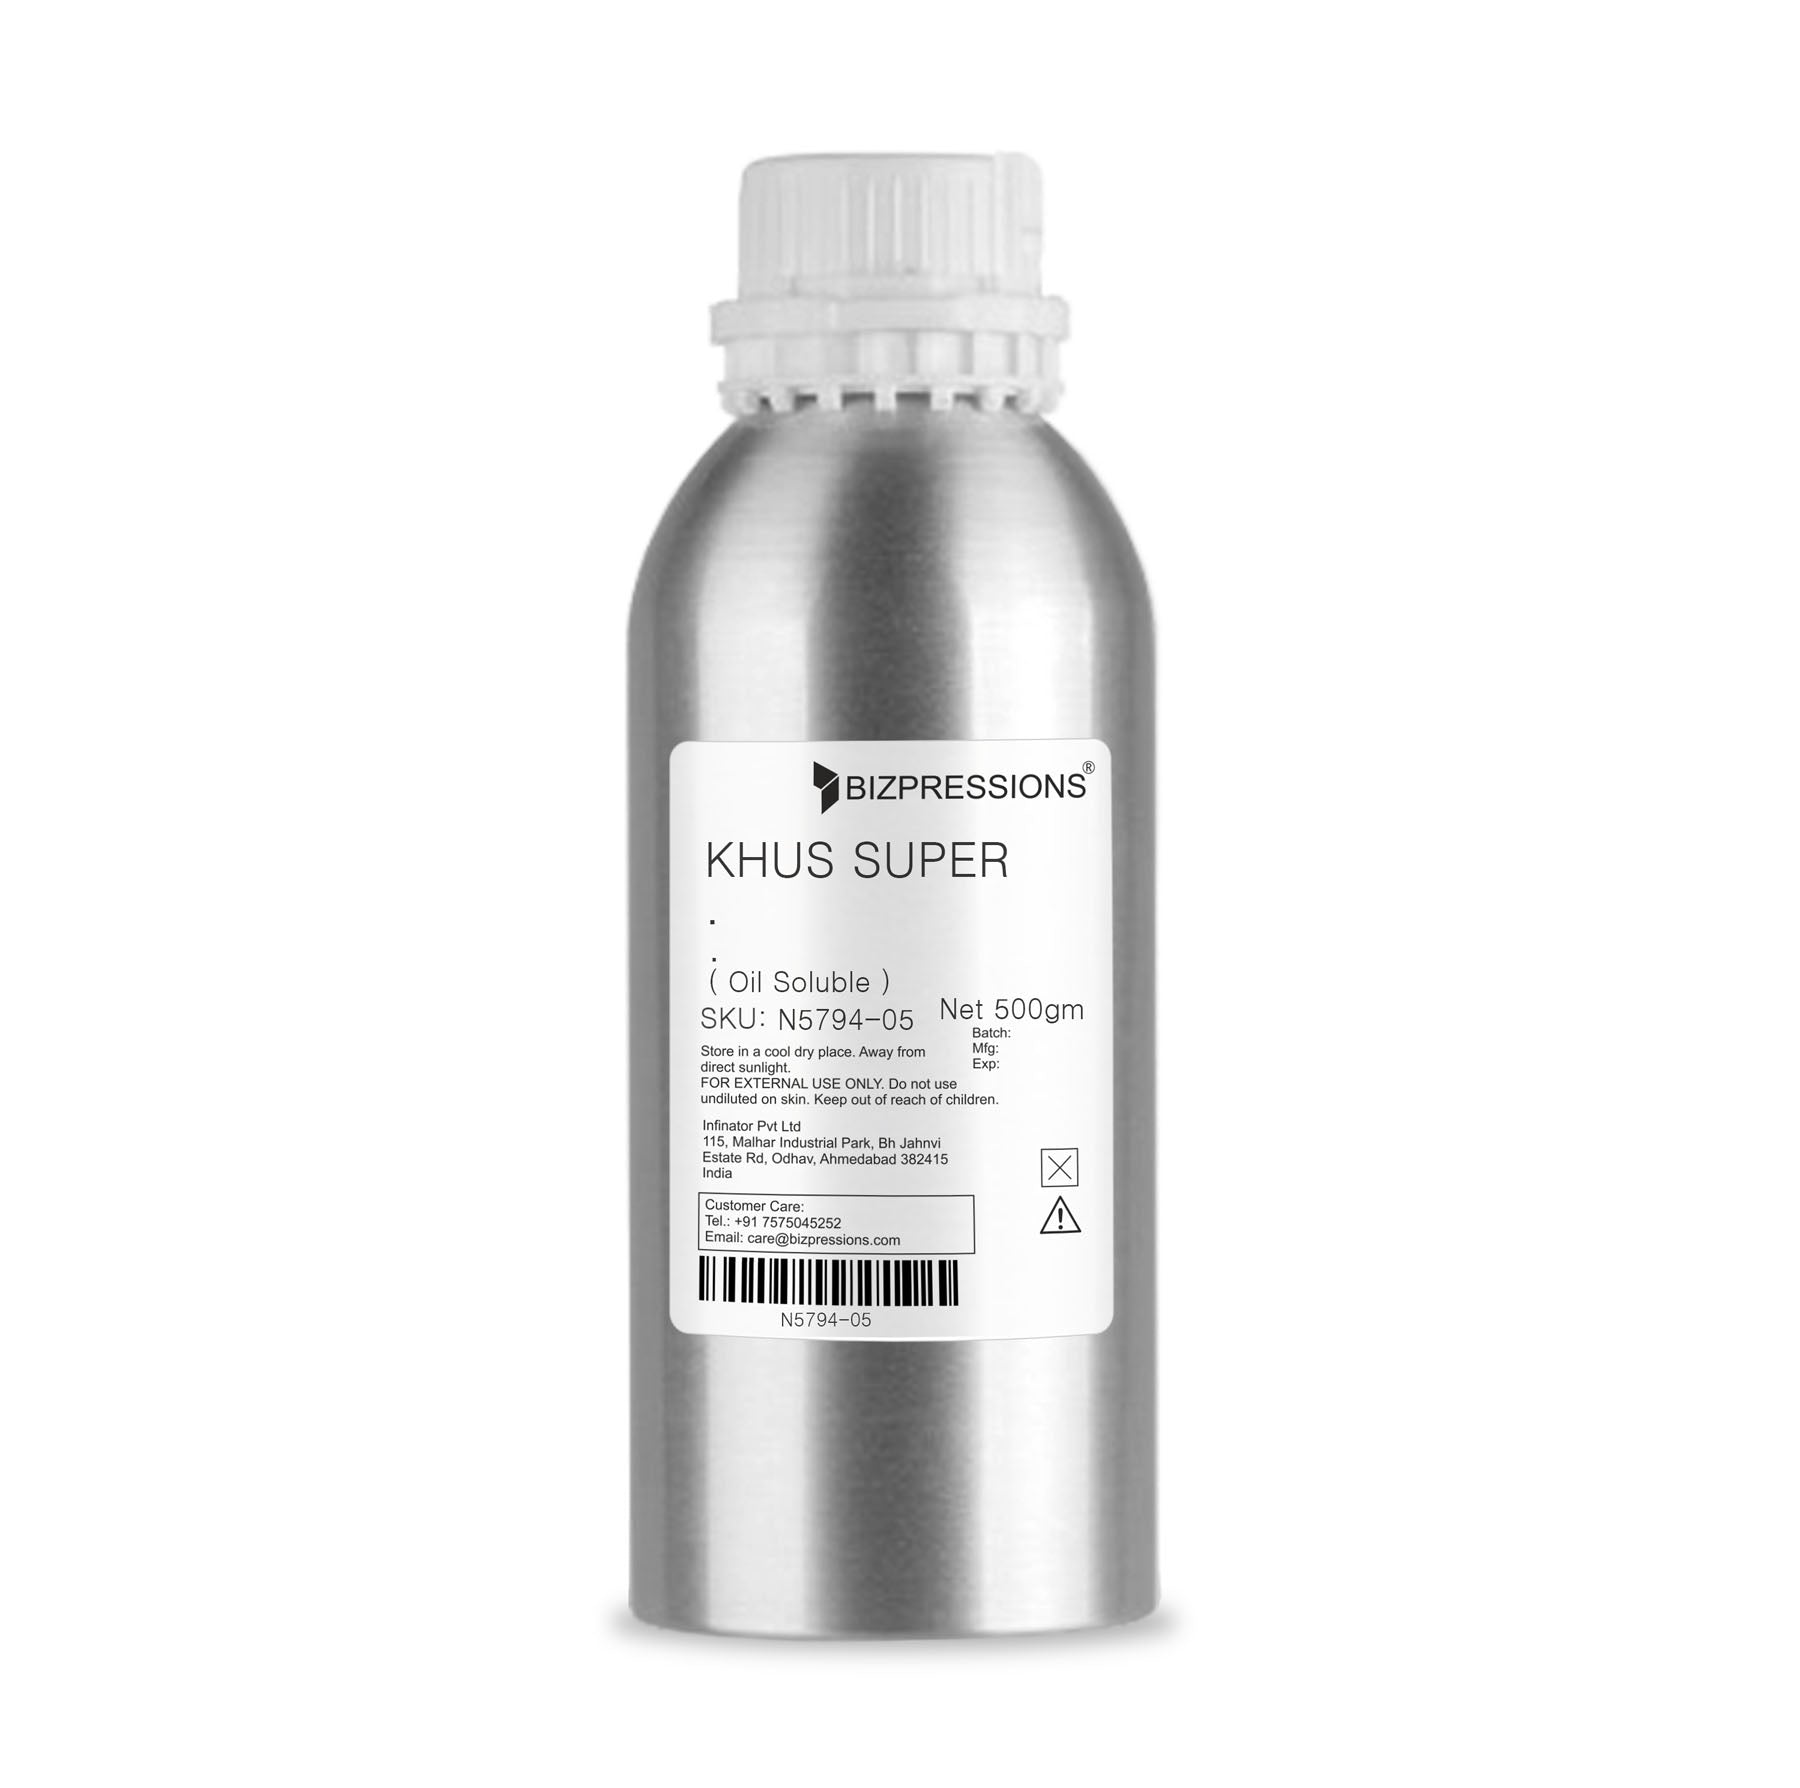 KHUS SUPER - Fragrance ( Oil Soluble ) - 500 gm